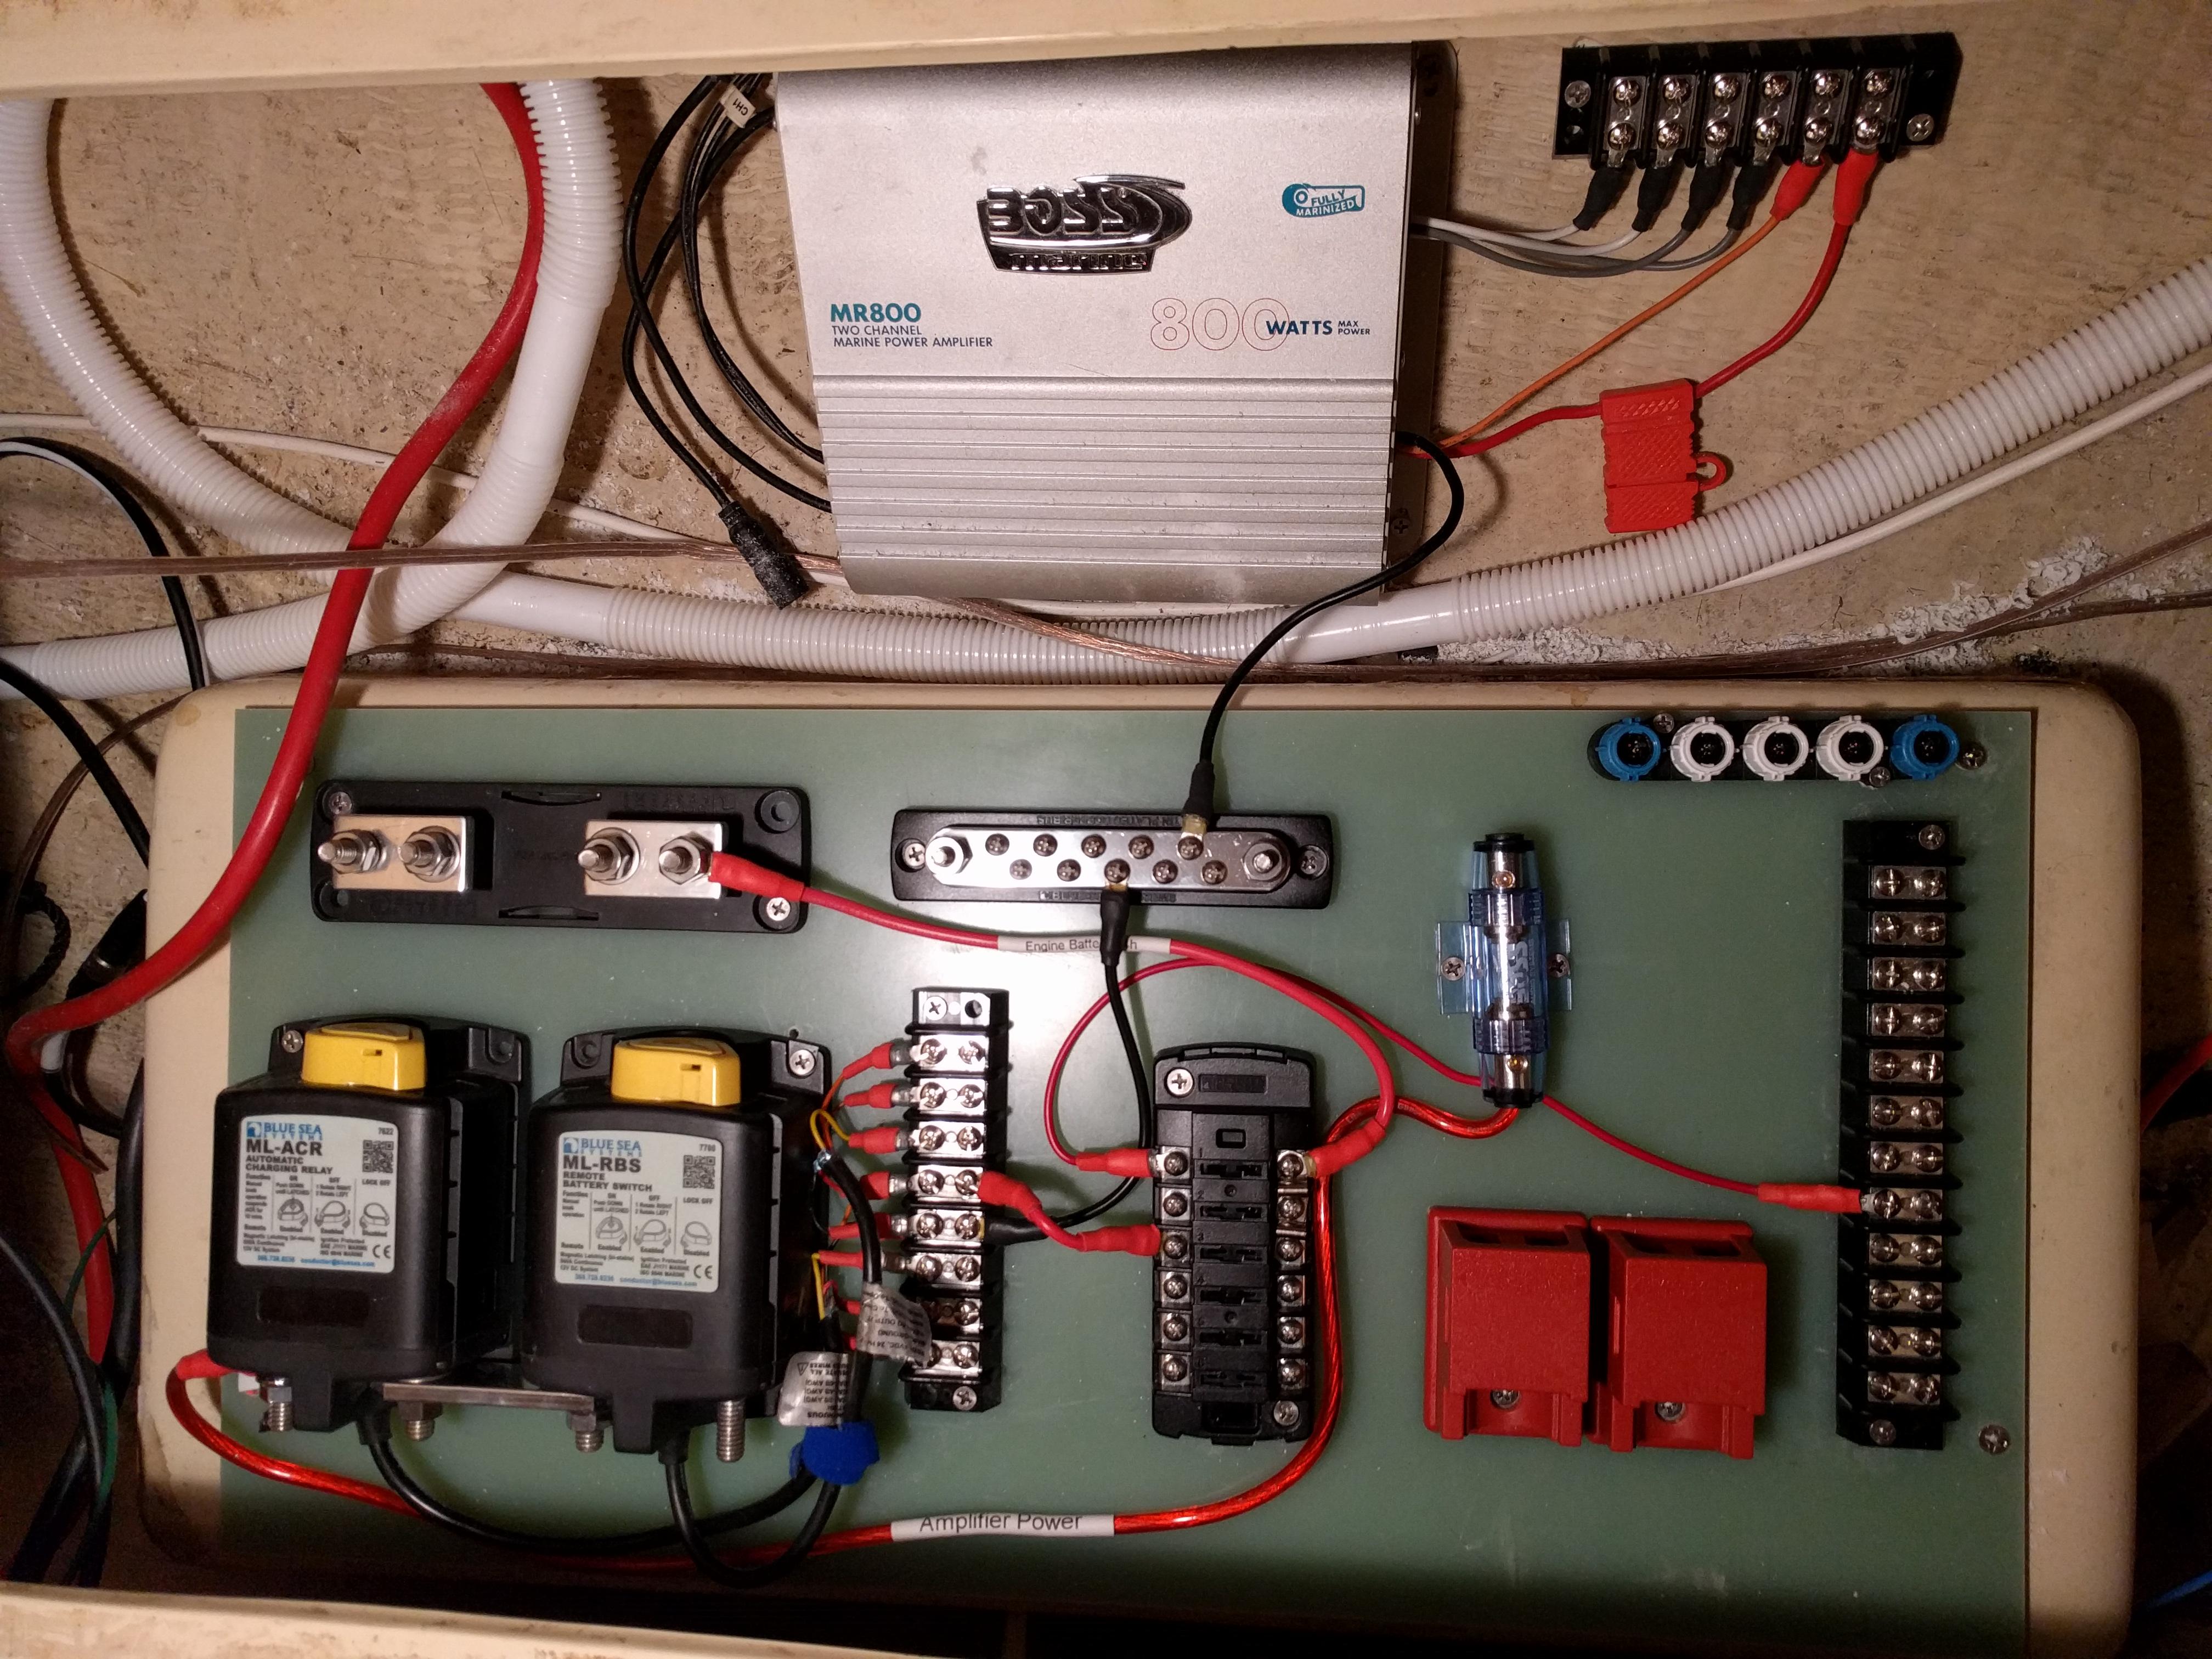 older ml-rbs 7700 wiring diagram